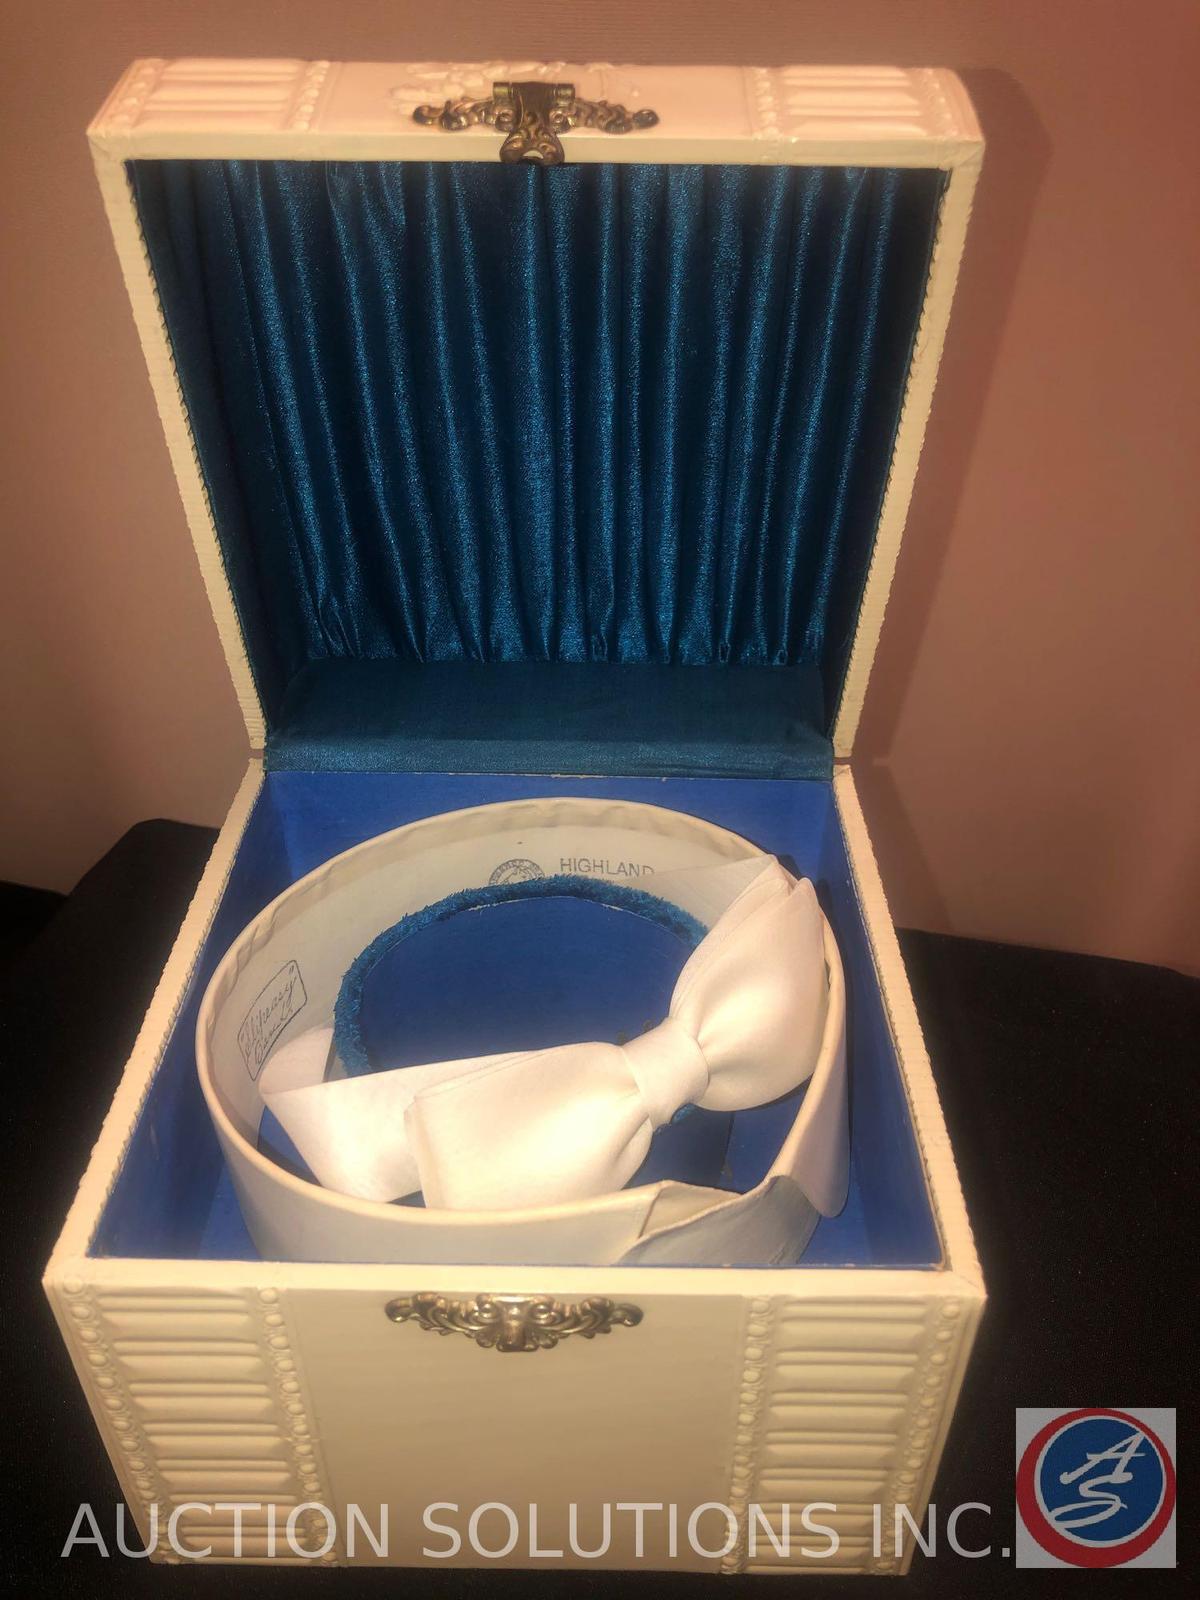 Small Ivory Box with Barker Brand "Slipeasy" Tuxedo Band and White Bow Tie